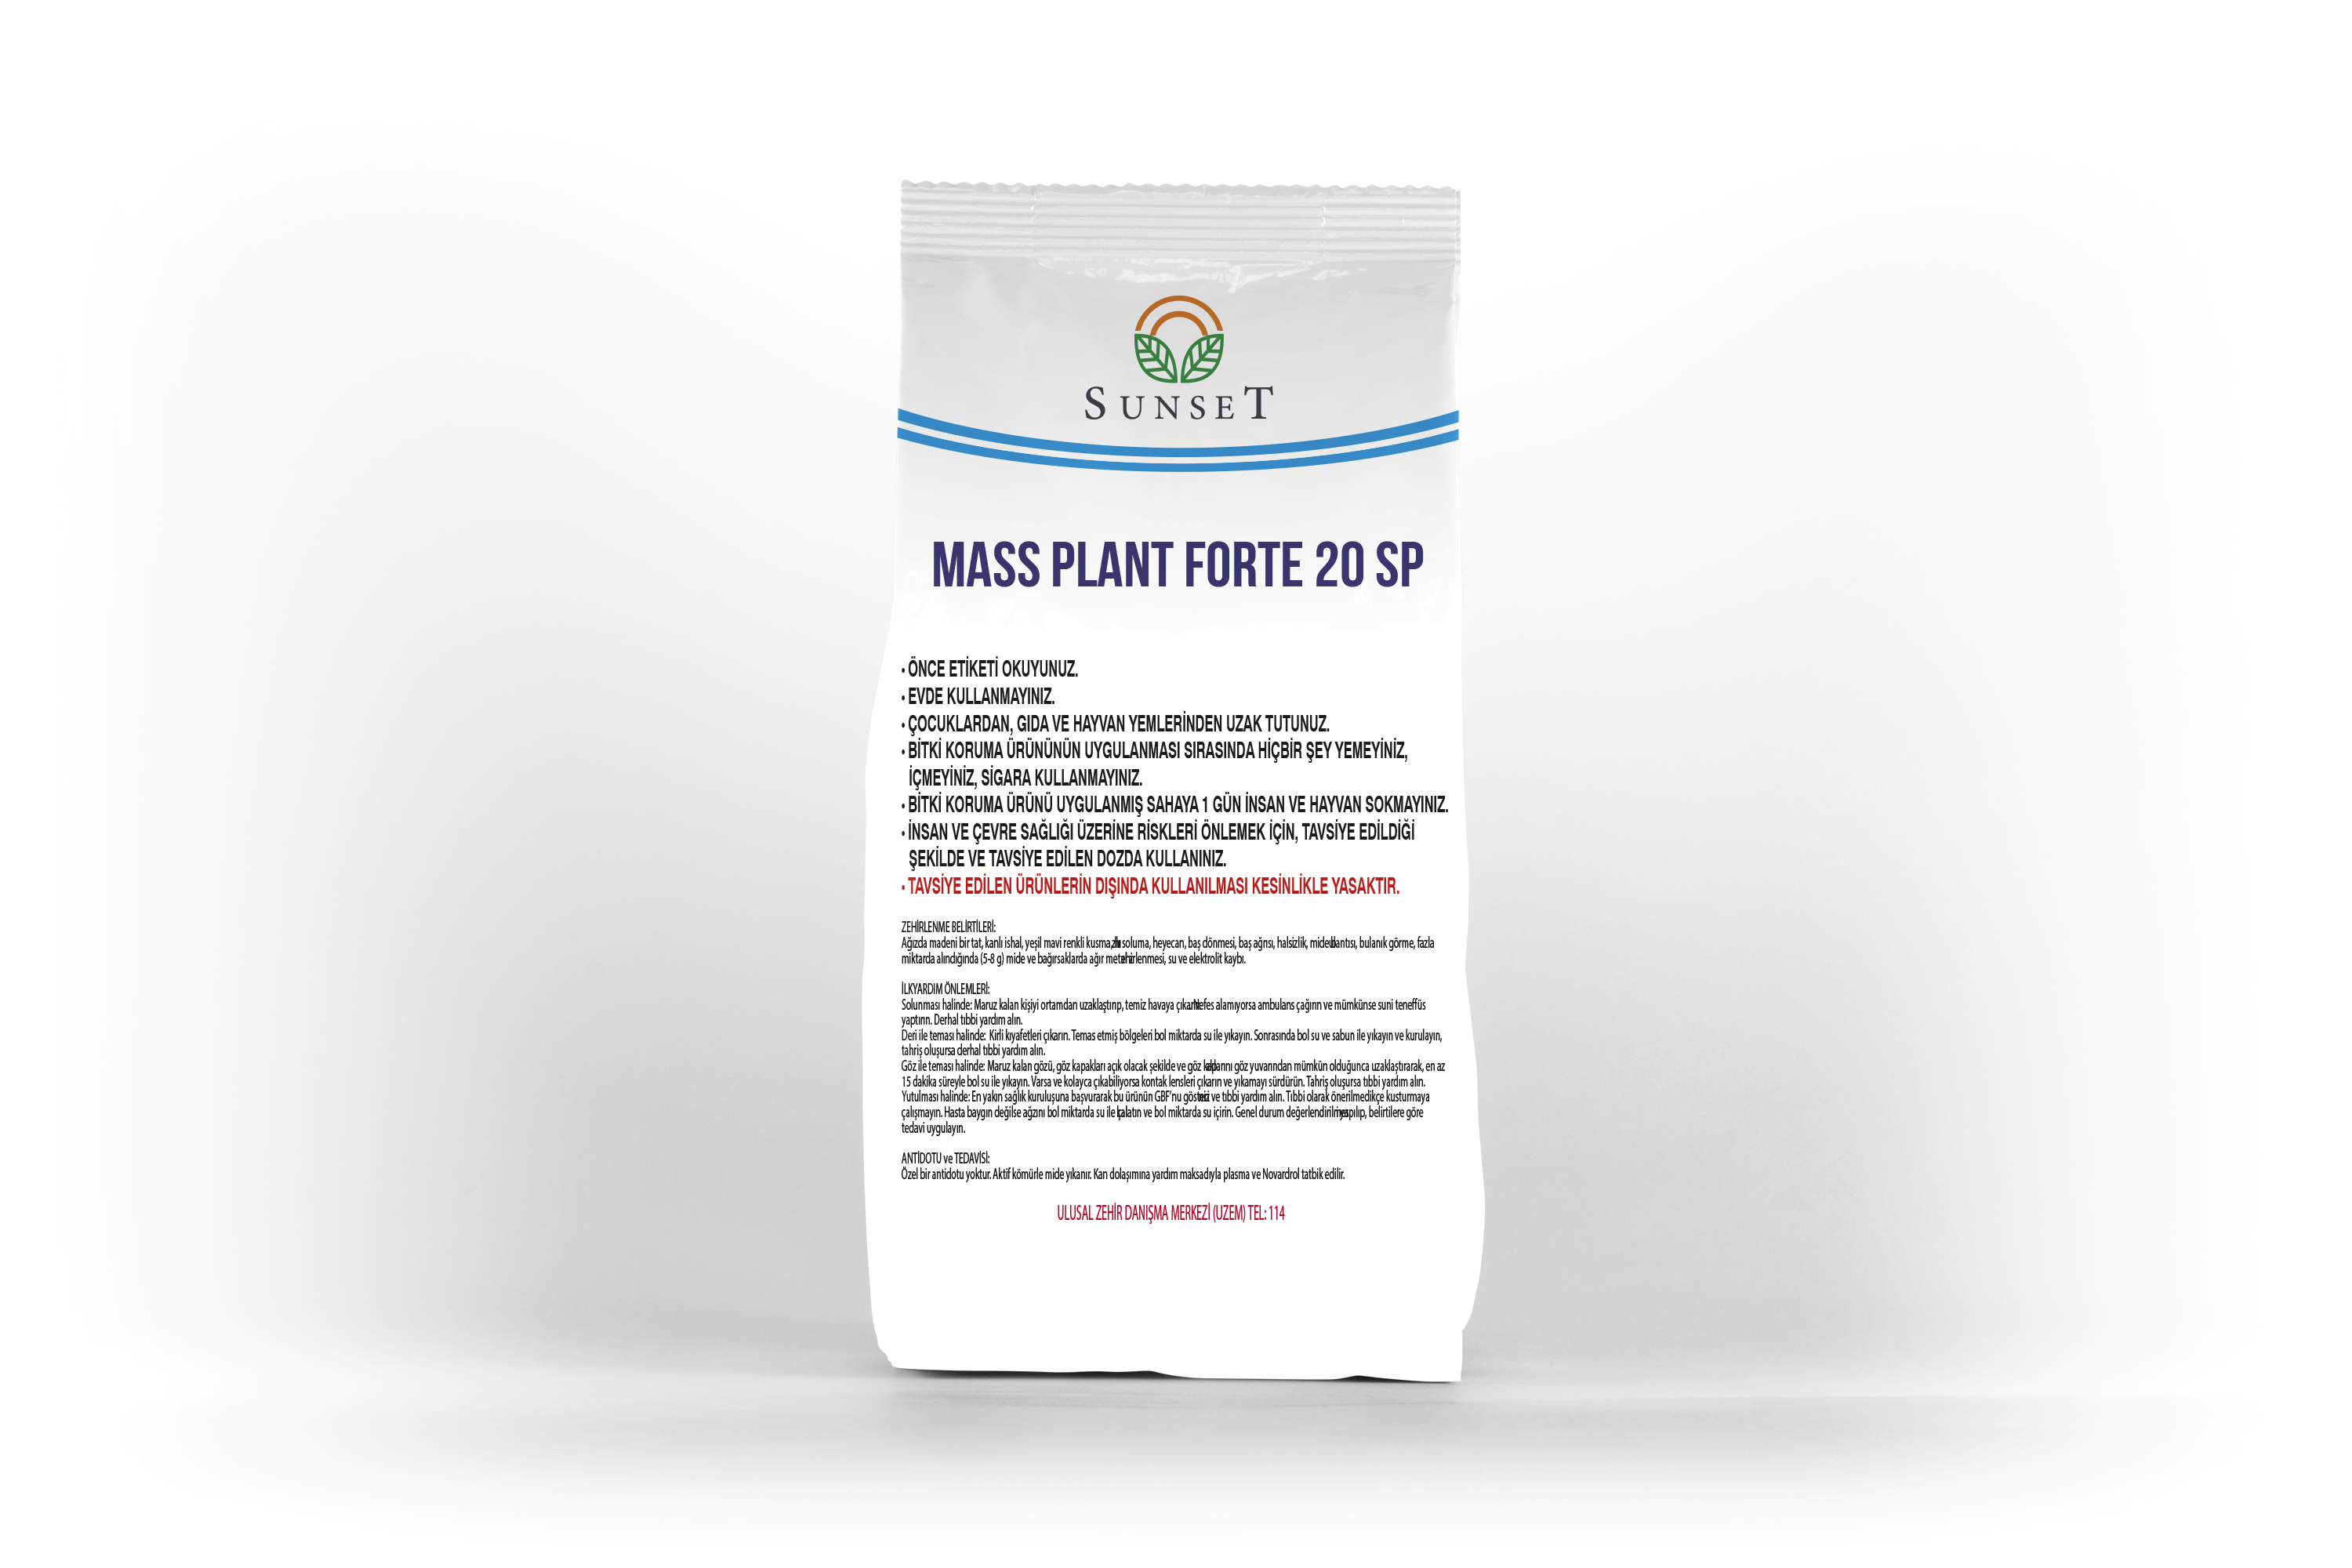 Mass plant forte 20 SP / 20% Acetamiprid / Sunset Kimya / 1 l, l